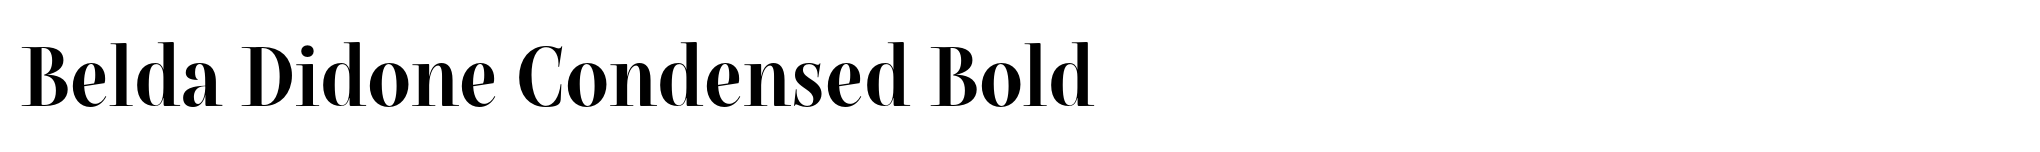 Belda Didone Condensed Bold image